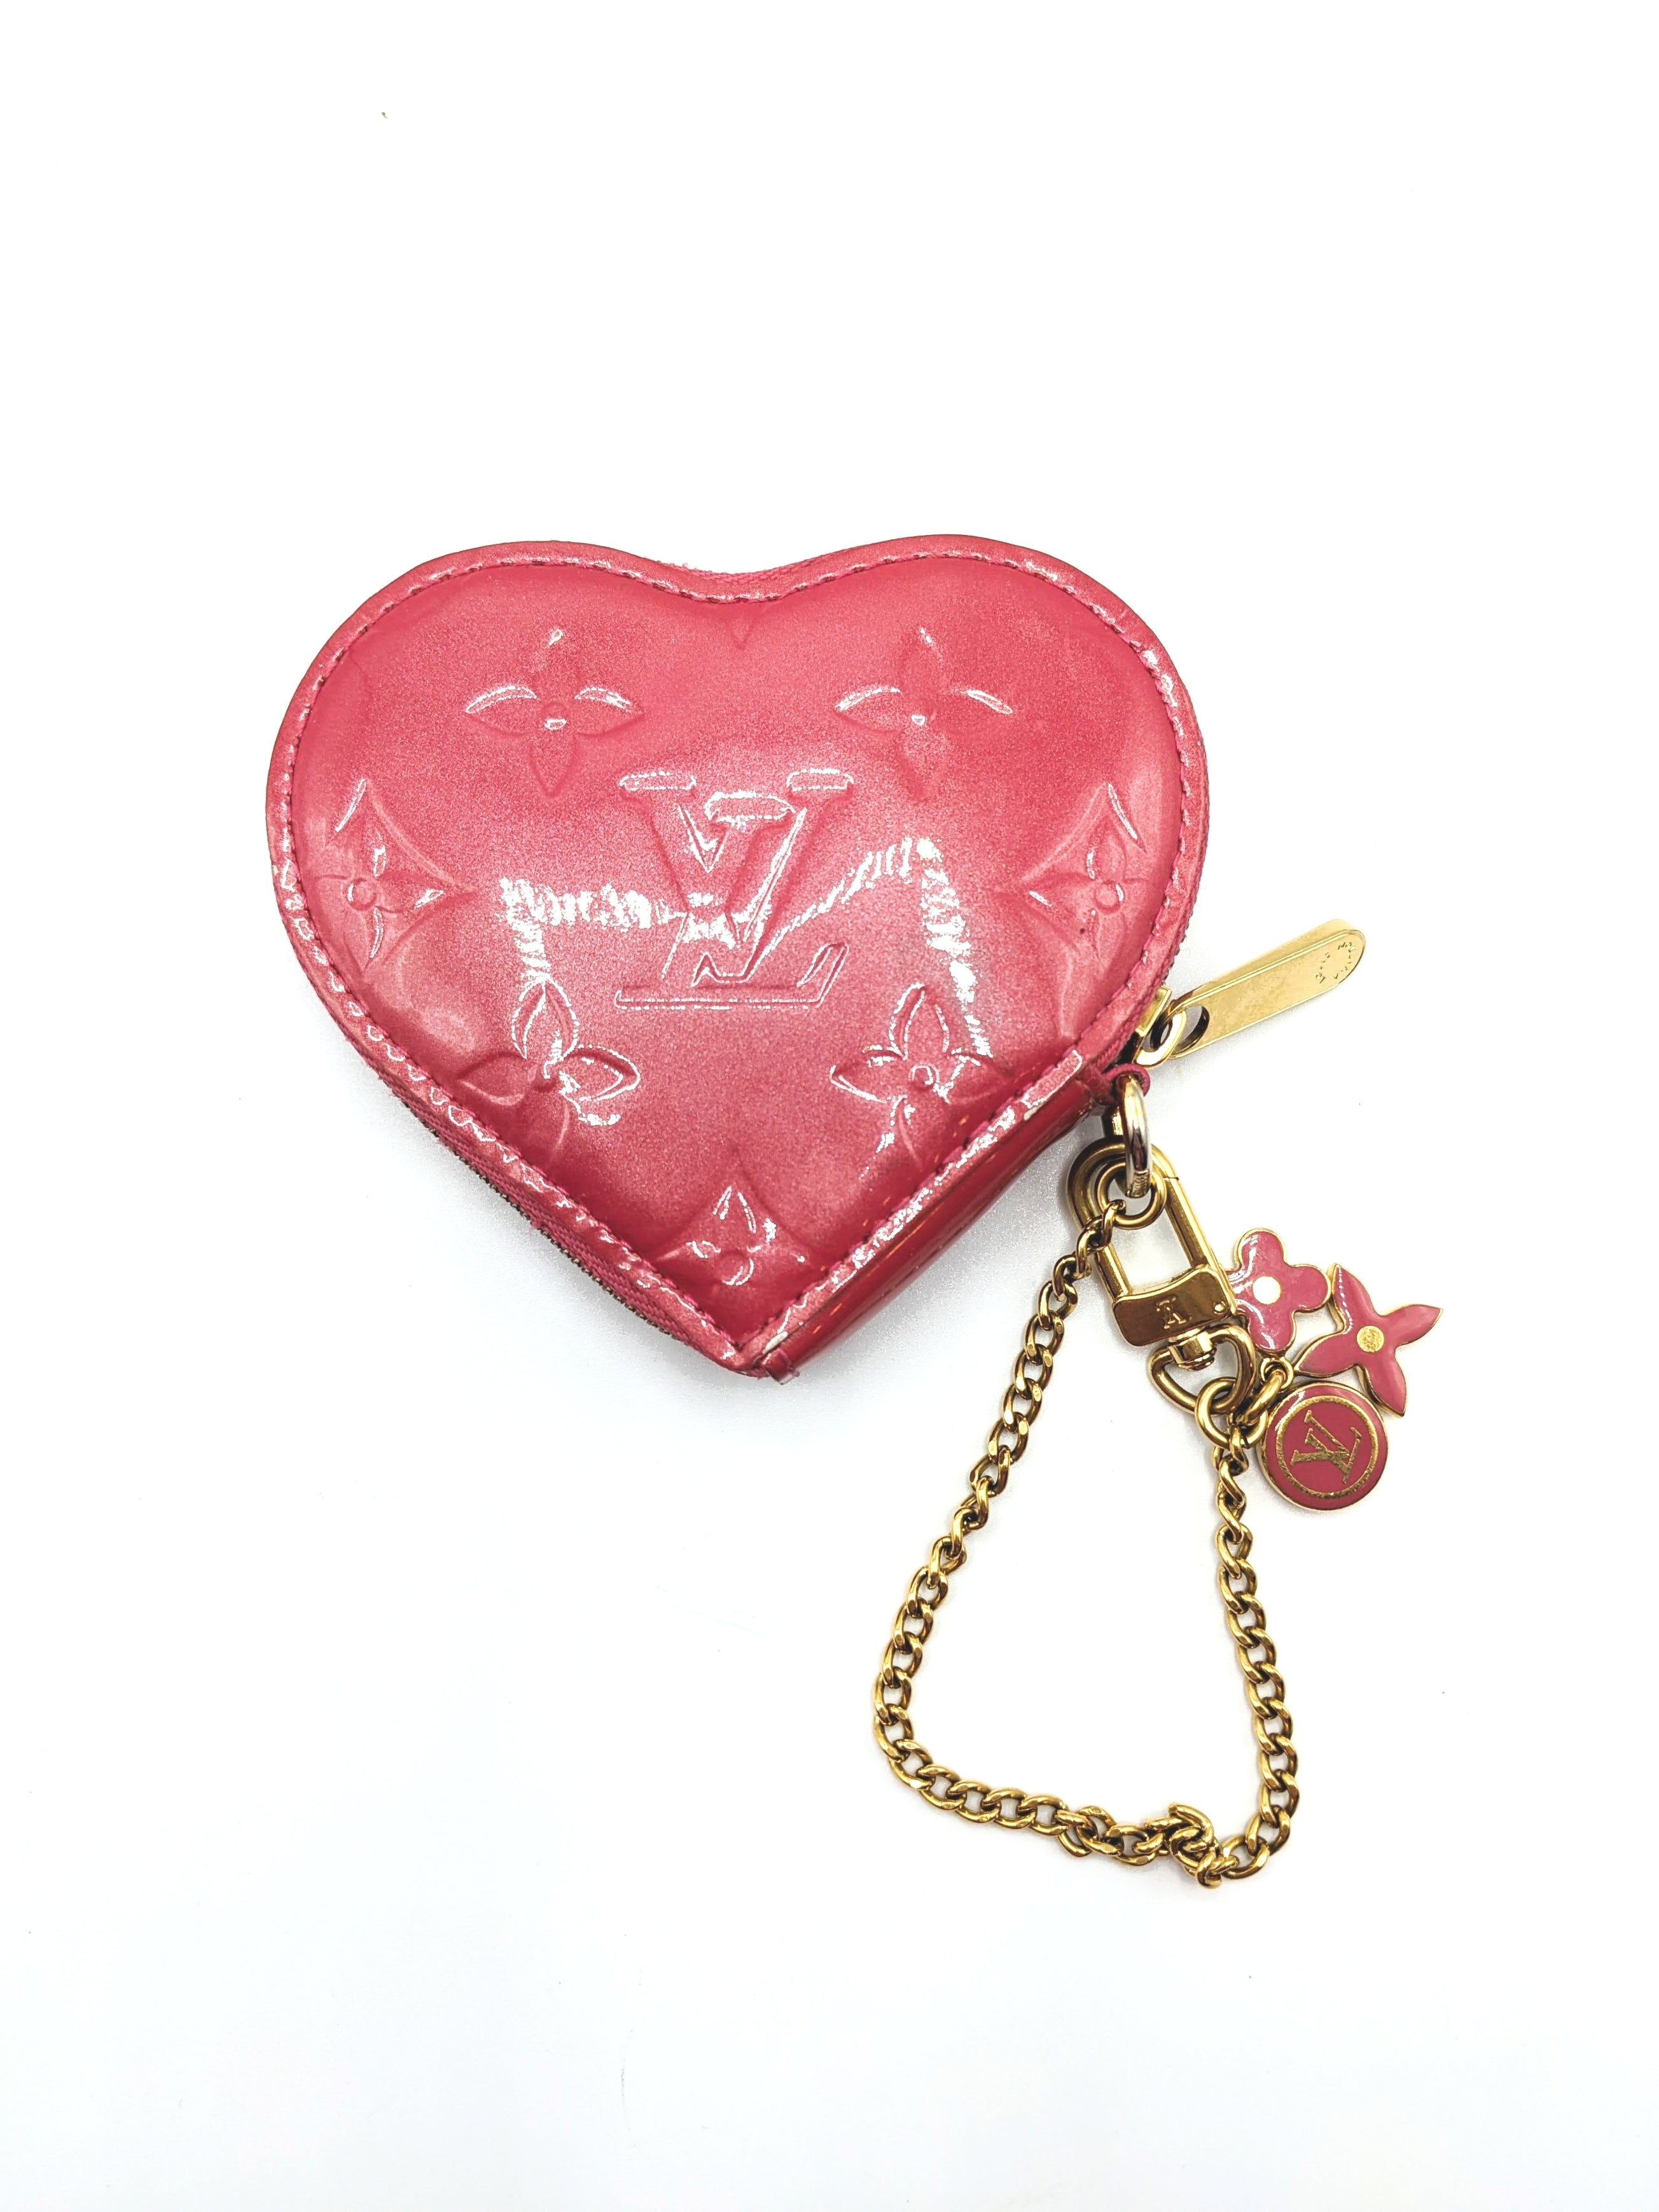 authentic louis vuitton heart coin purse